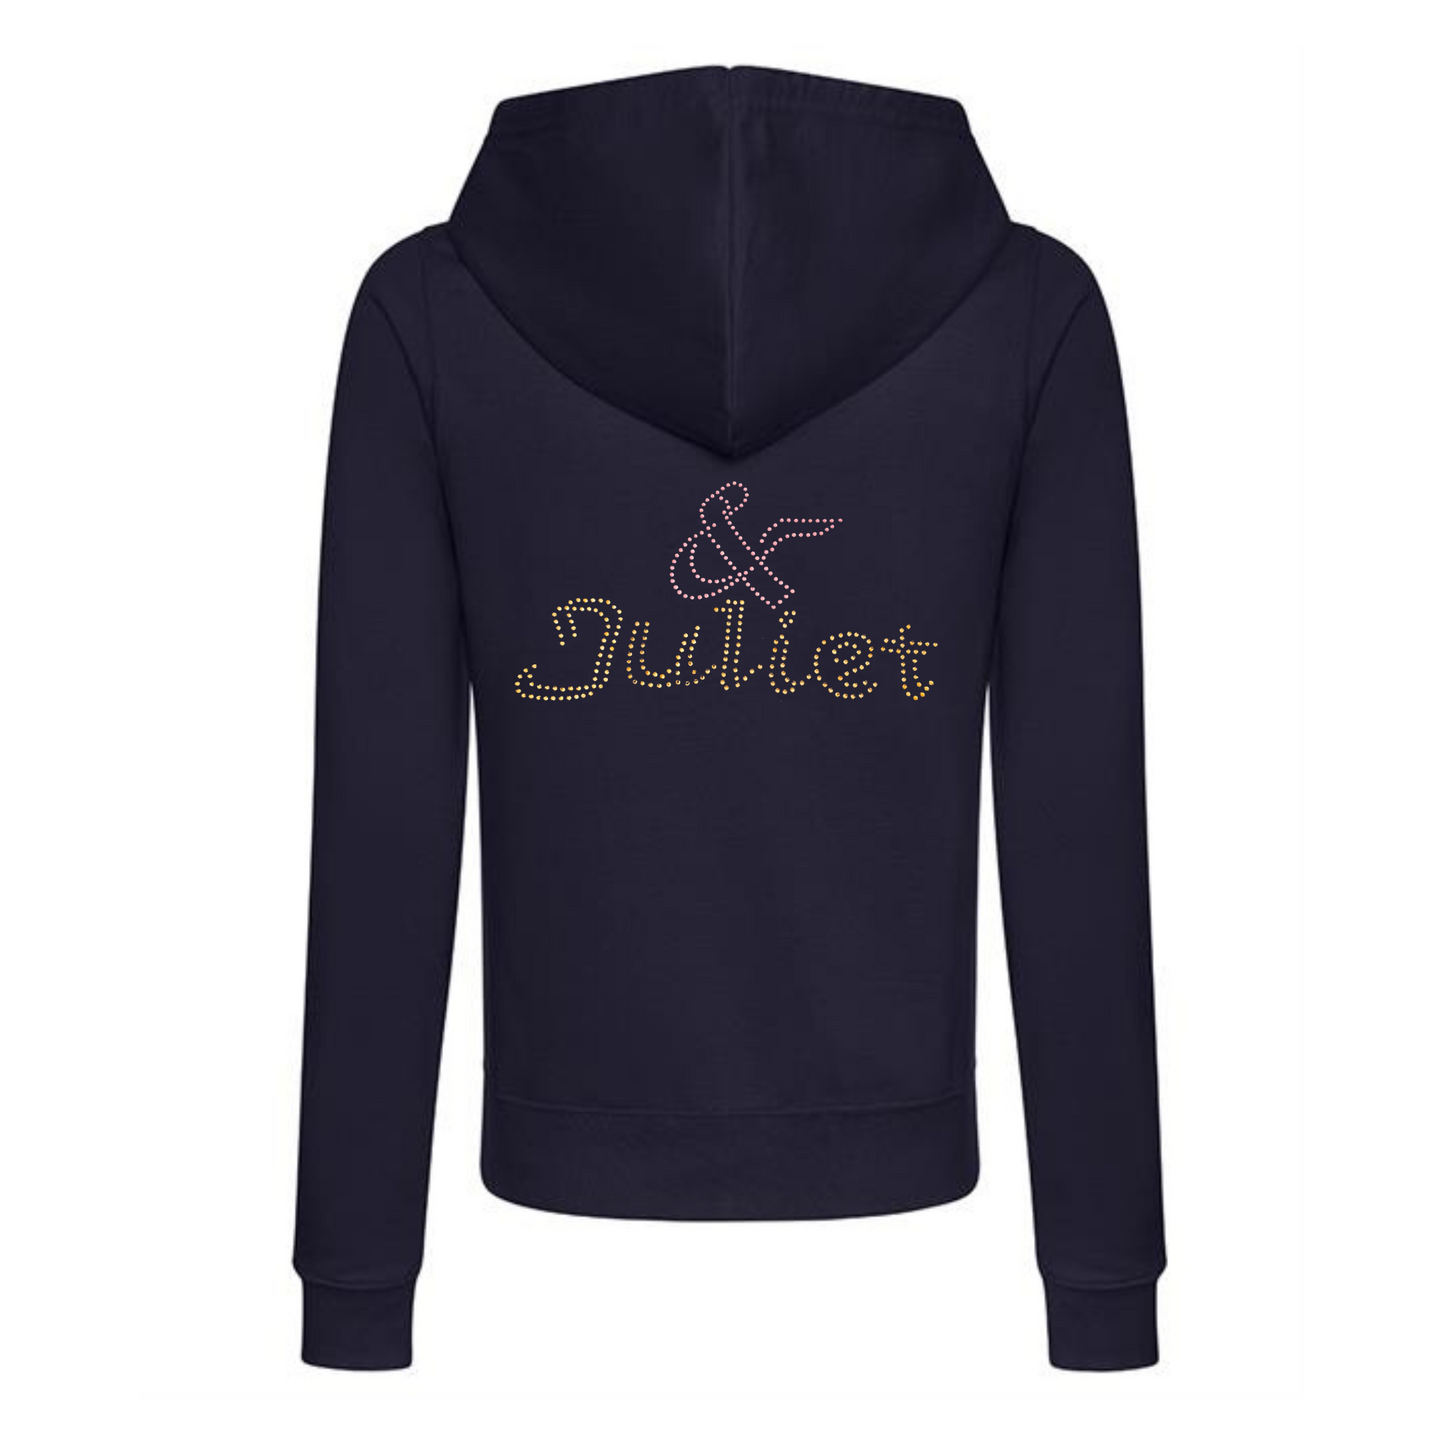 &Juliet Broadway musical double design zipped hoodie